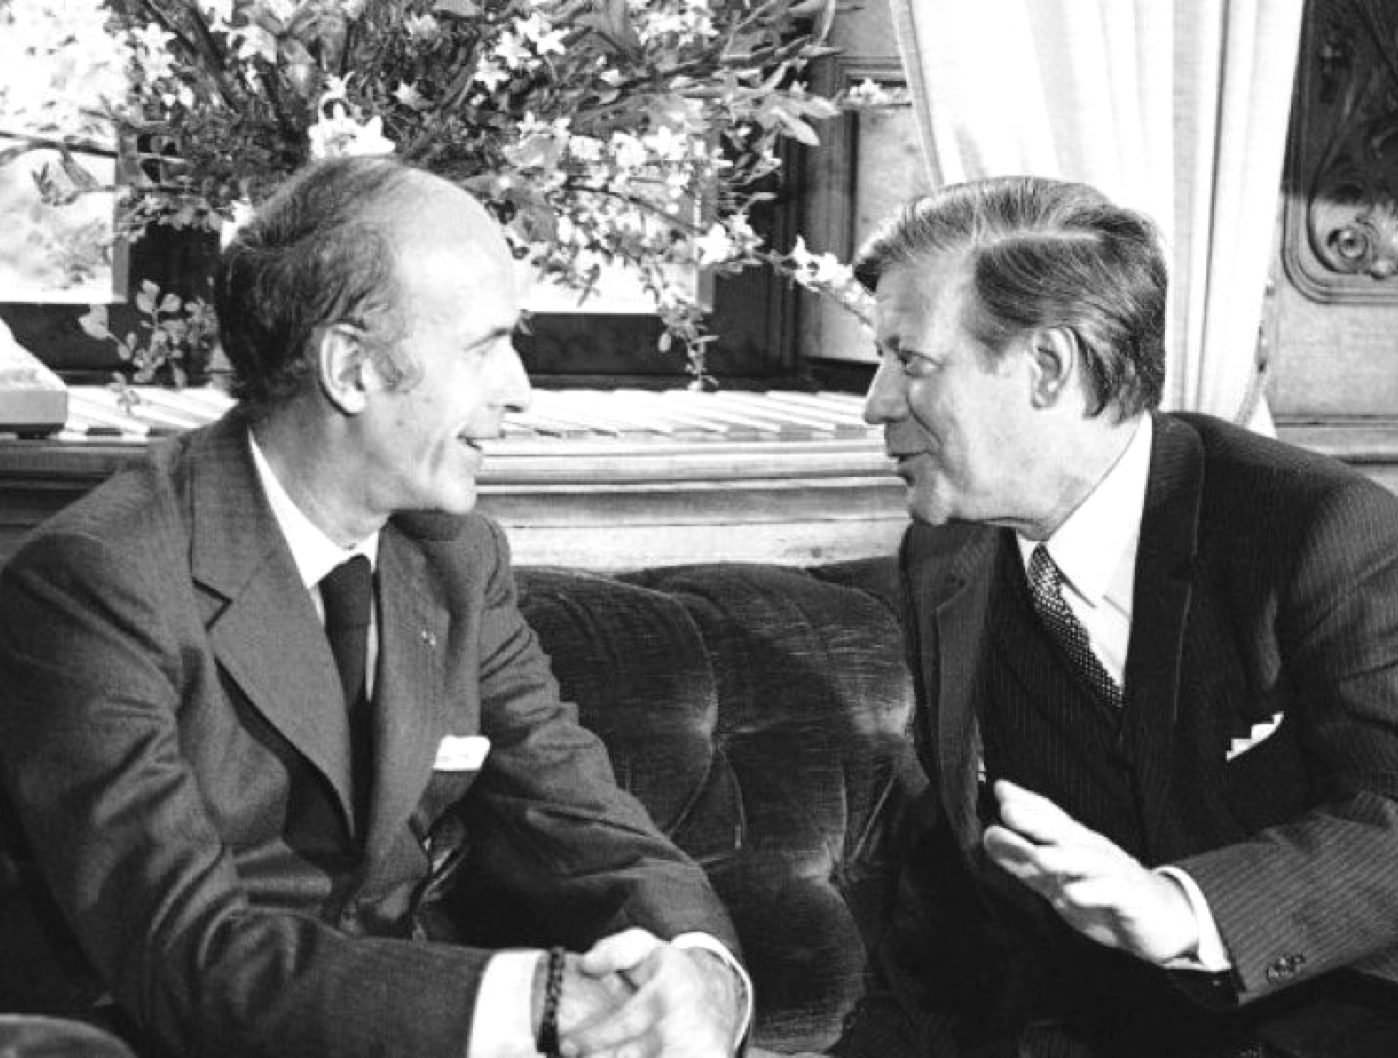 Giscard d'Estaign and Helmut Schmidt talking in 1974